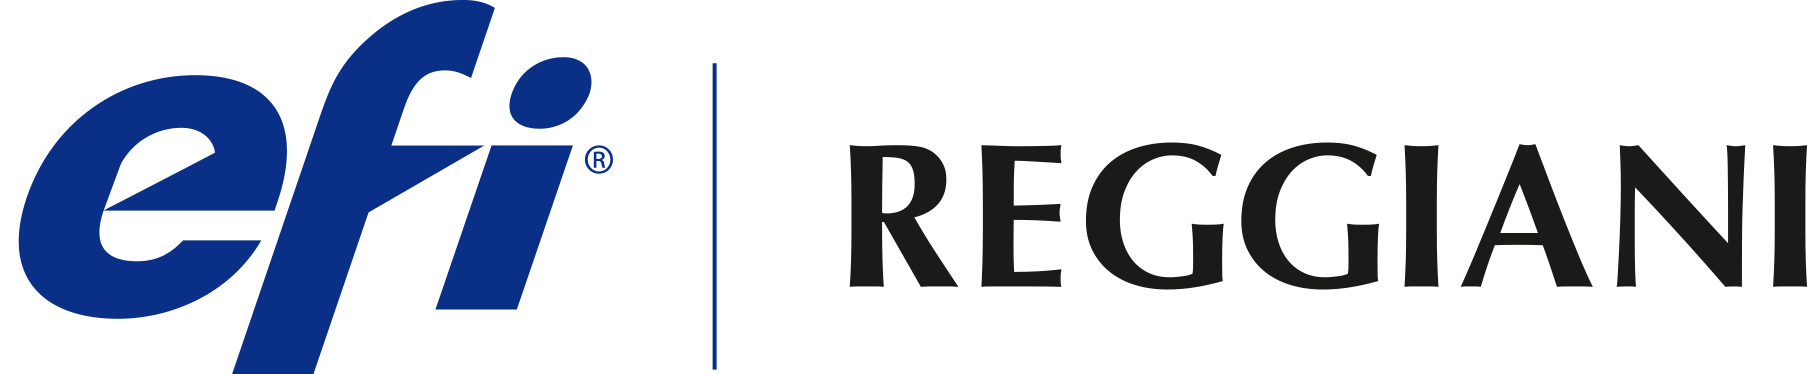 EFI_Reggiani logo